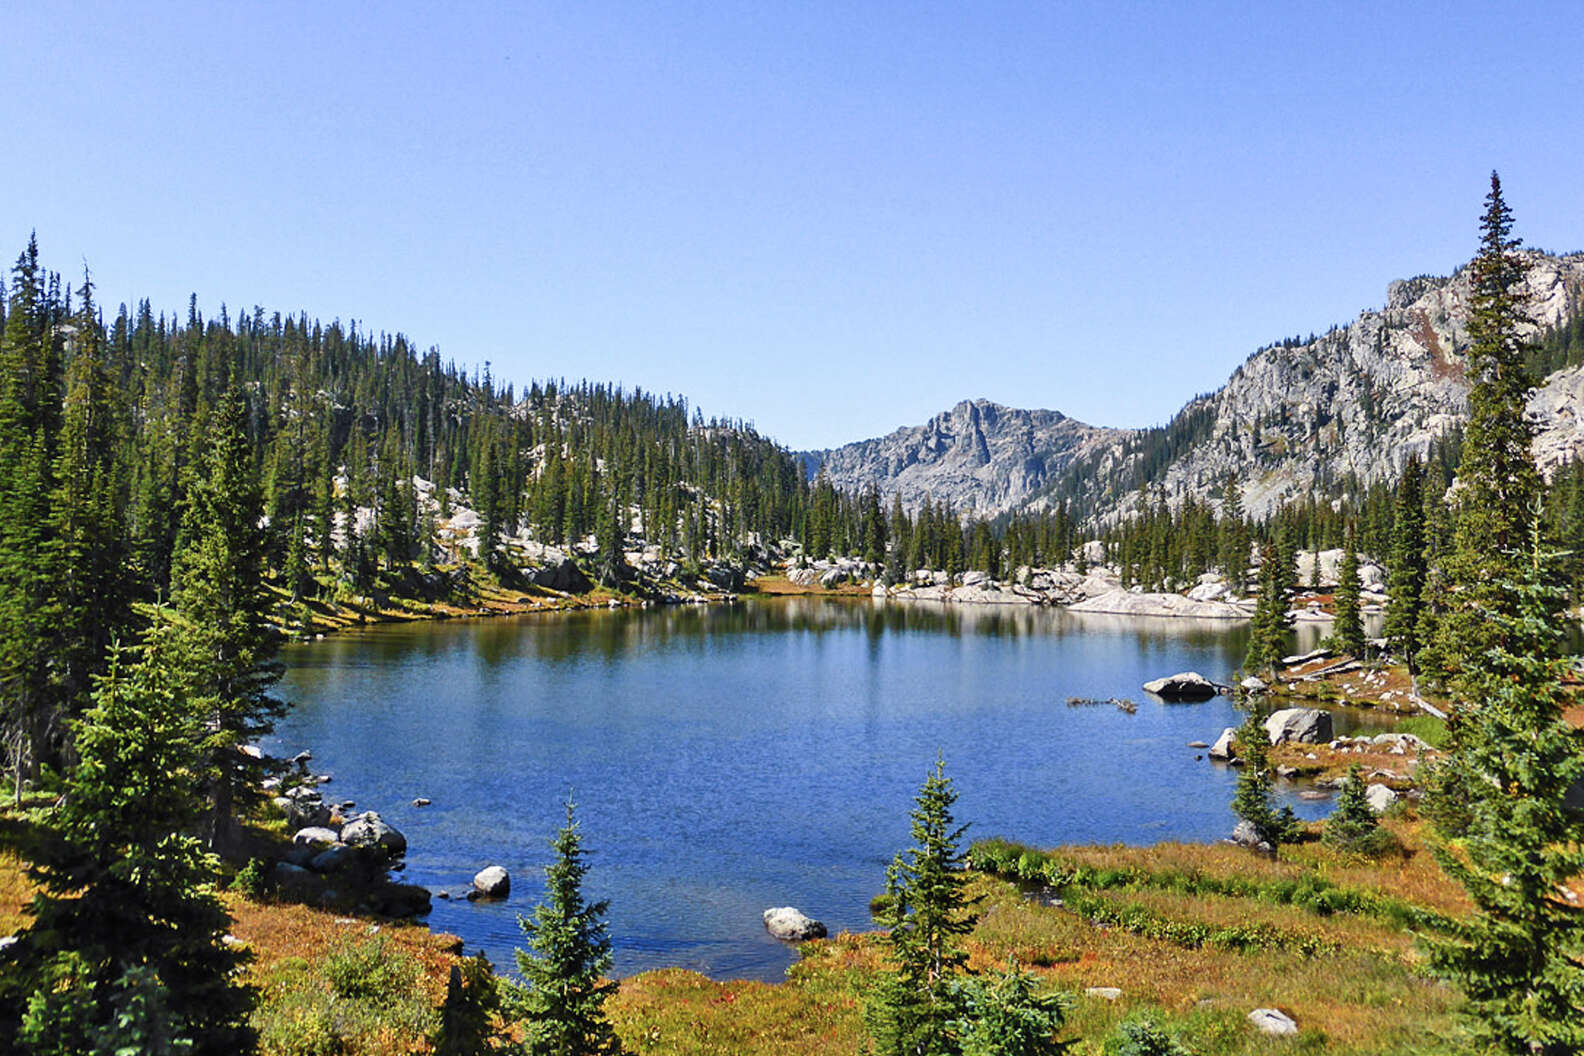 Best Hikes Near Denver: Top Hiking Trails & Spots Around Denver, CO